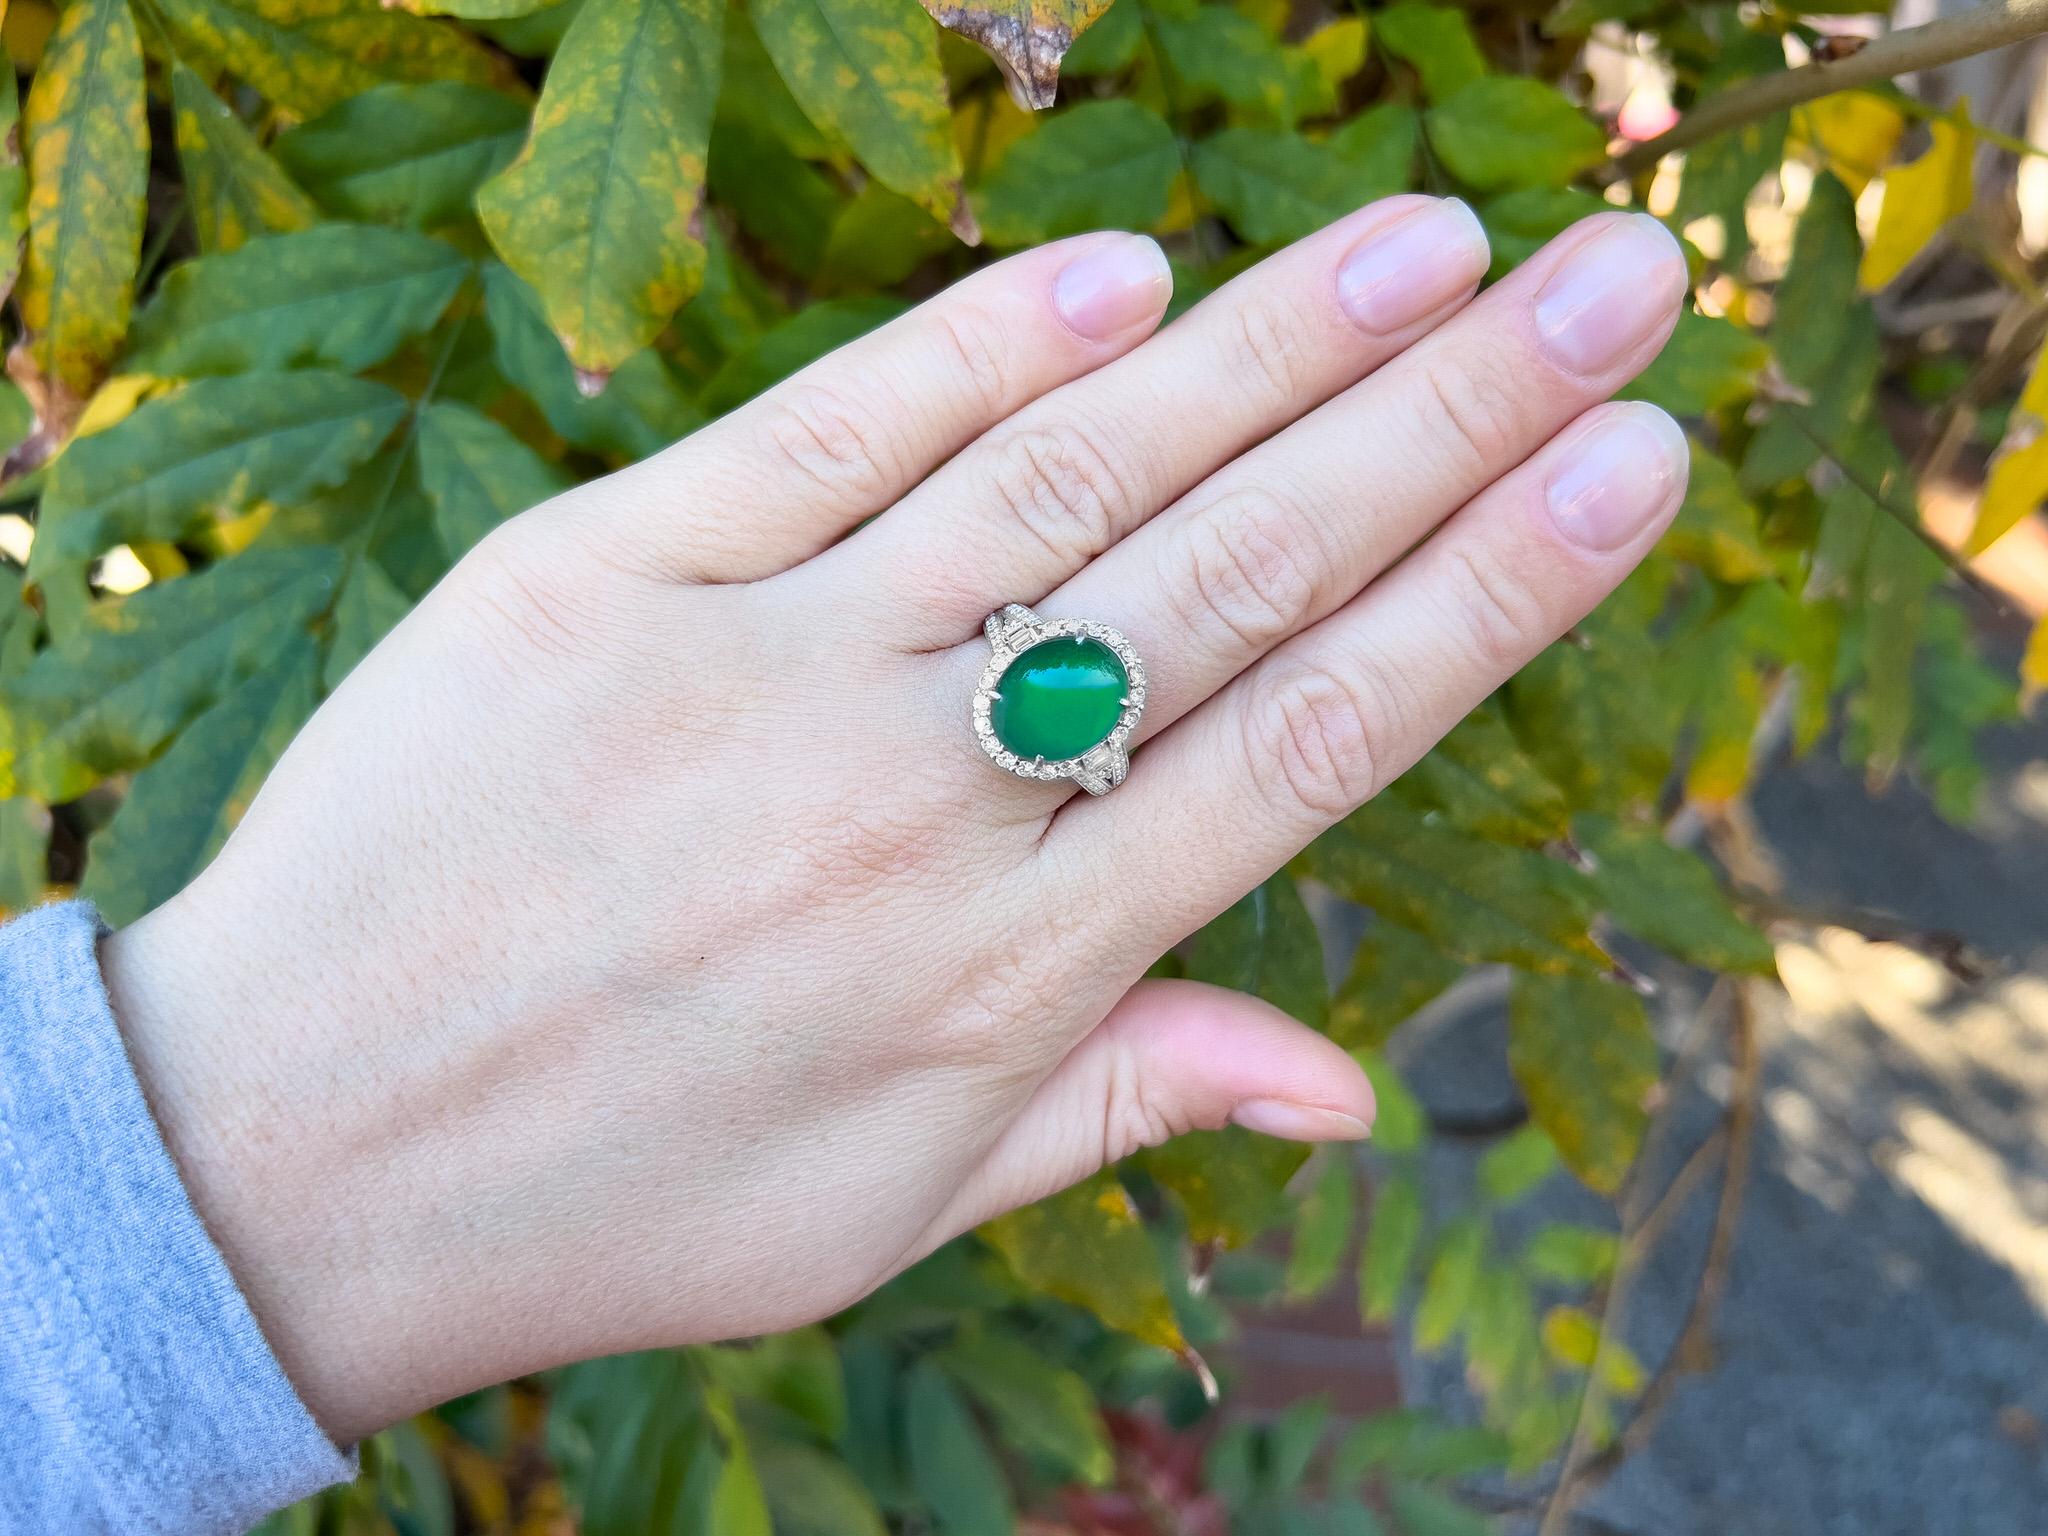 Imperial Jade
(Cut: Cabochon, Color: Green, Origin: Natural)
Diamond = 1.10 Carats
(Cut: Mixed, Color: D, Clarity: VS)
Metal = 18K White Gold
Ring Size = 7.75